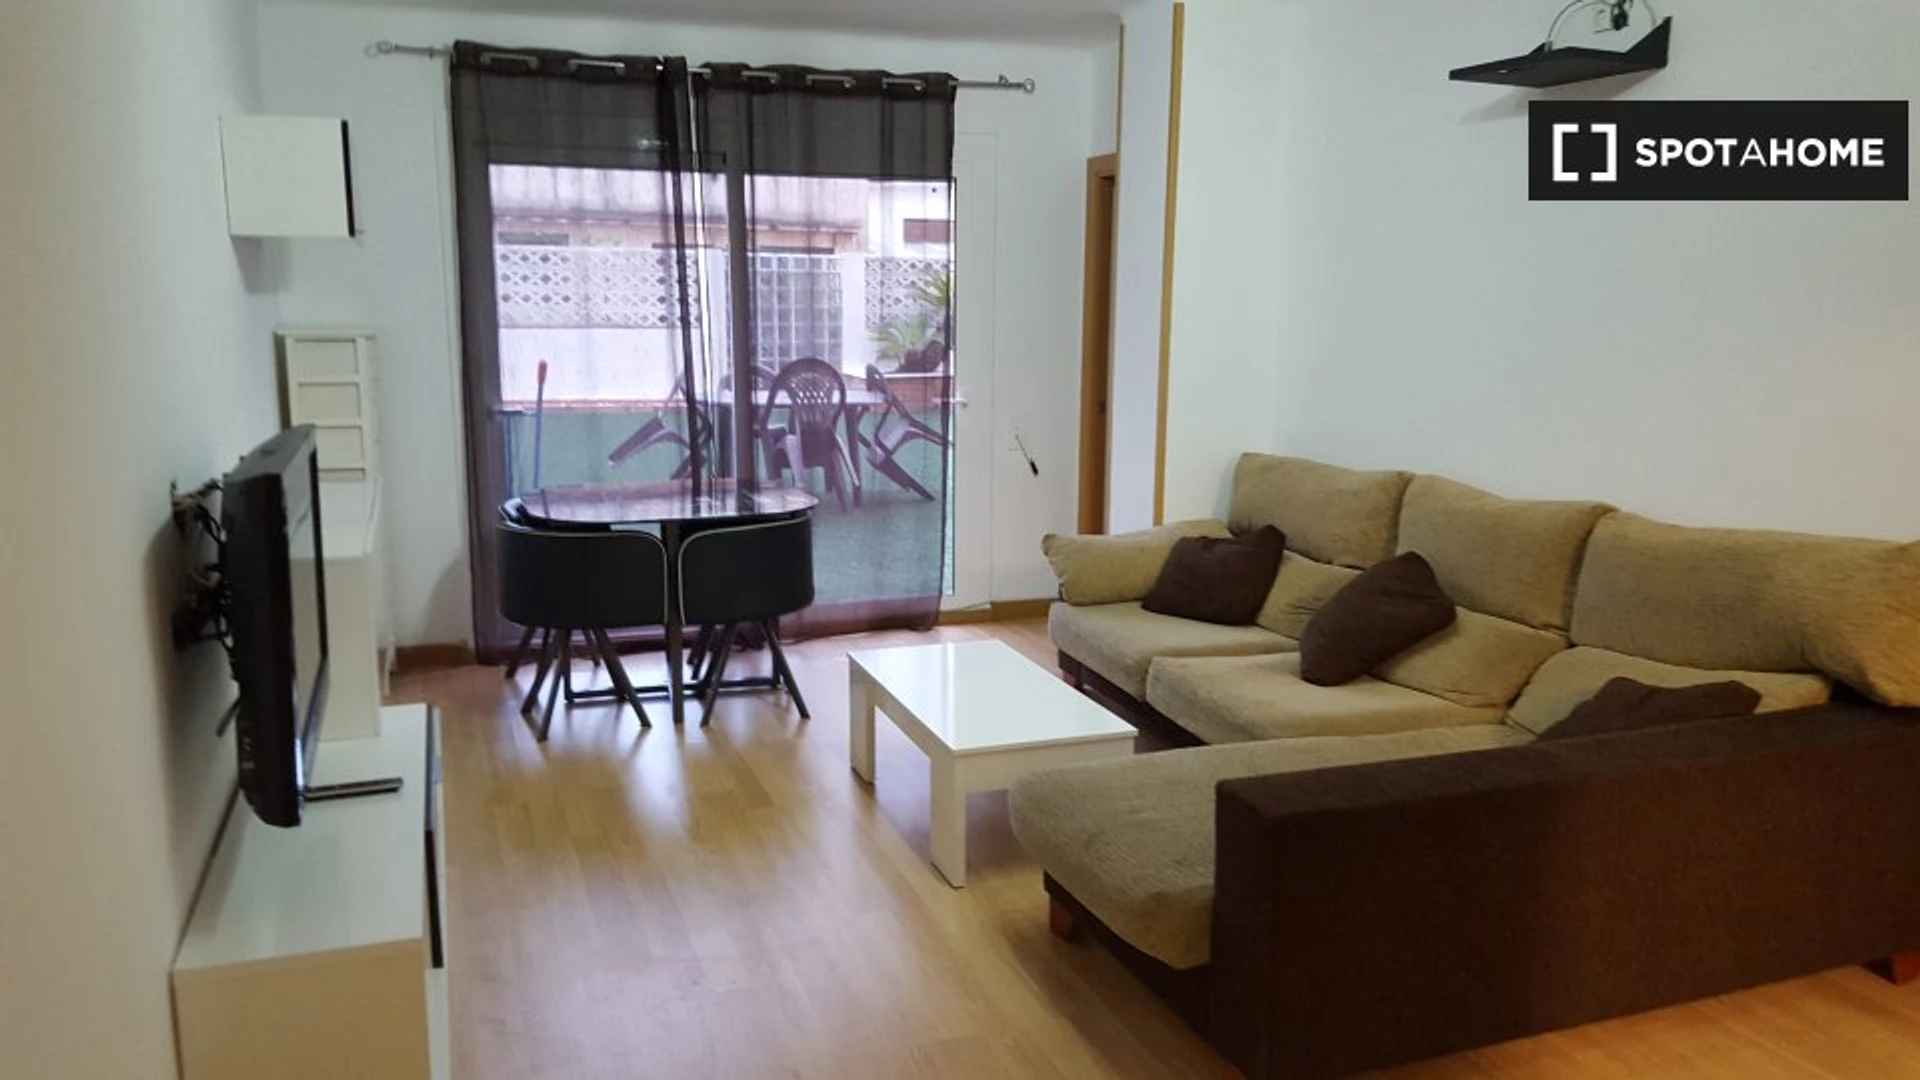 Habitación privada barata en Mataró